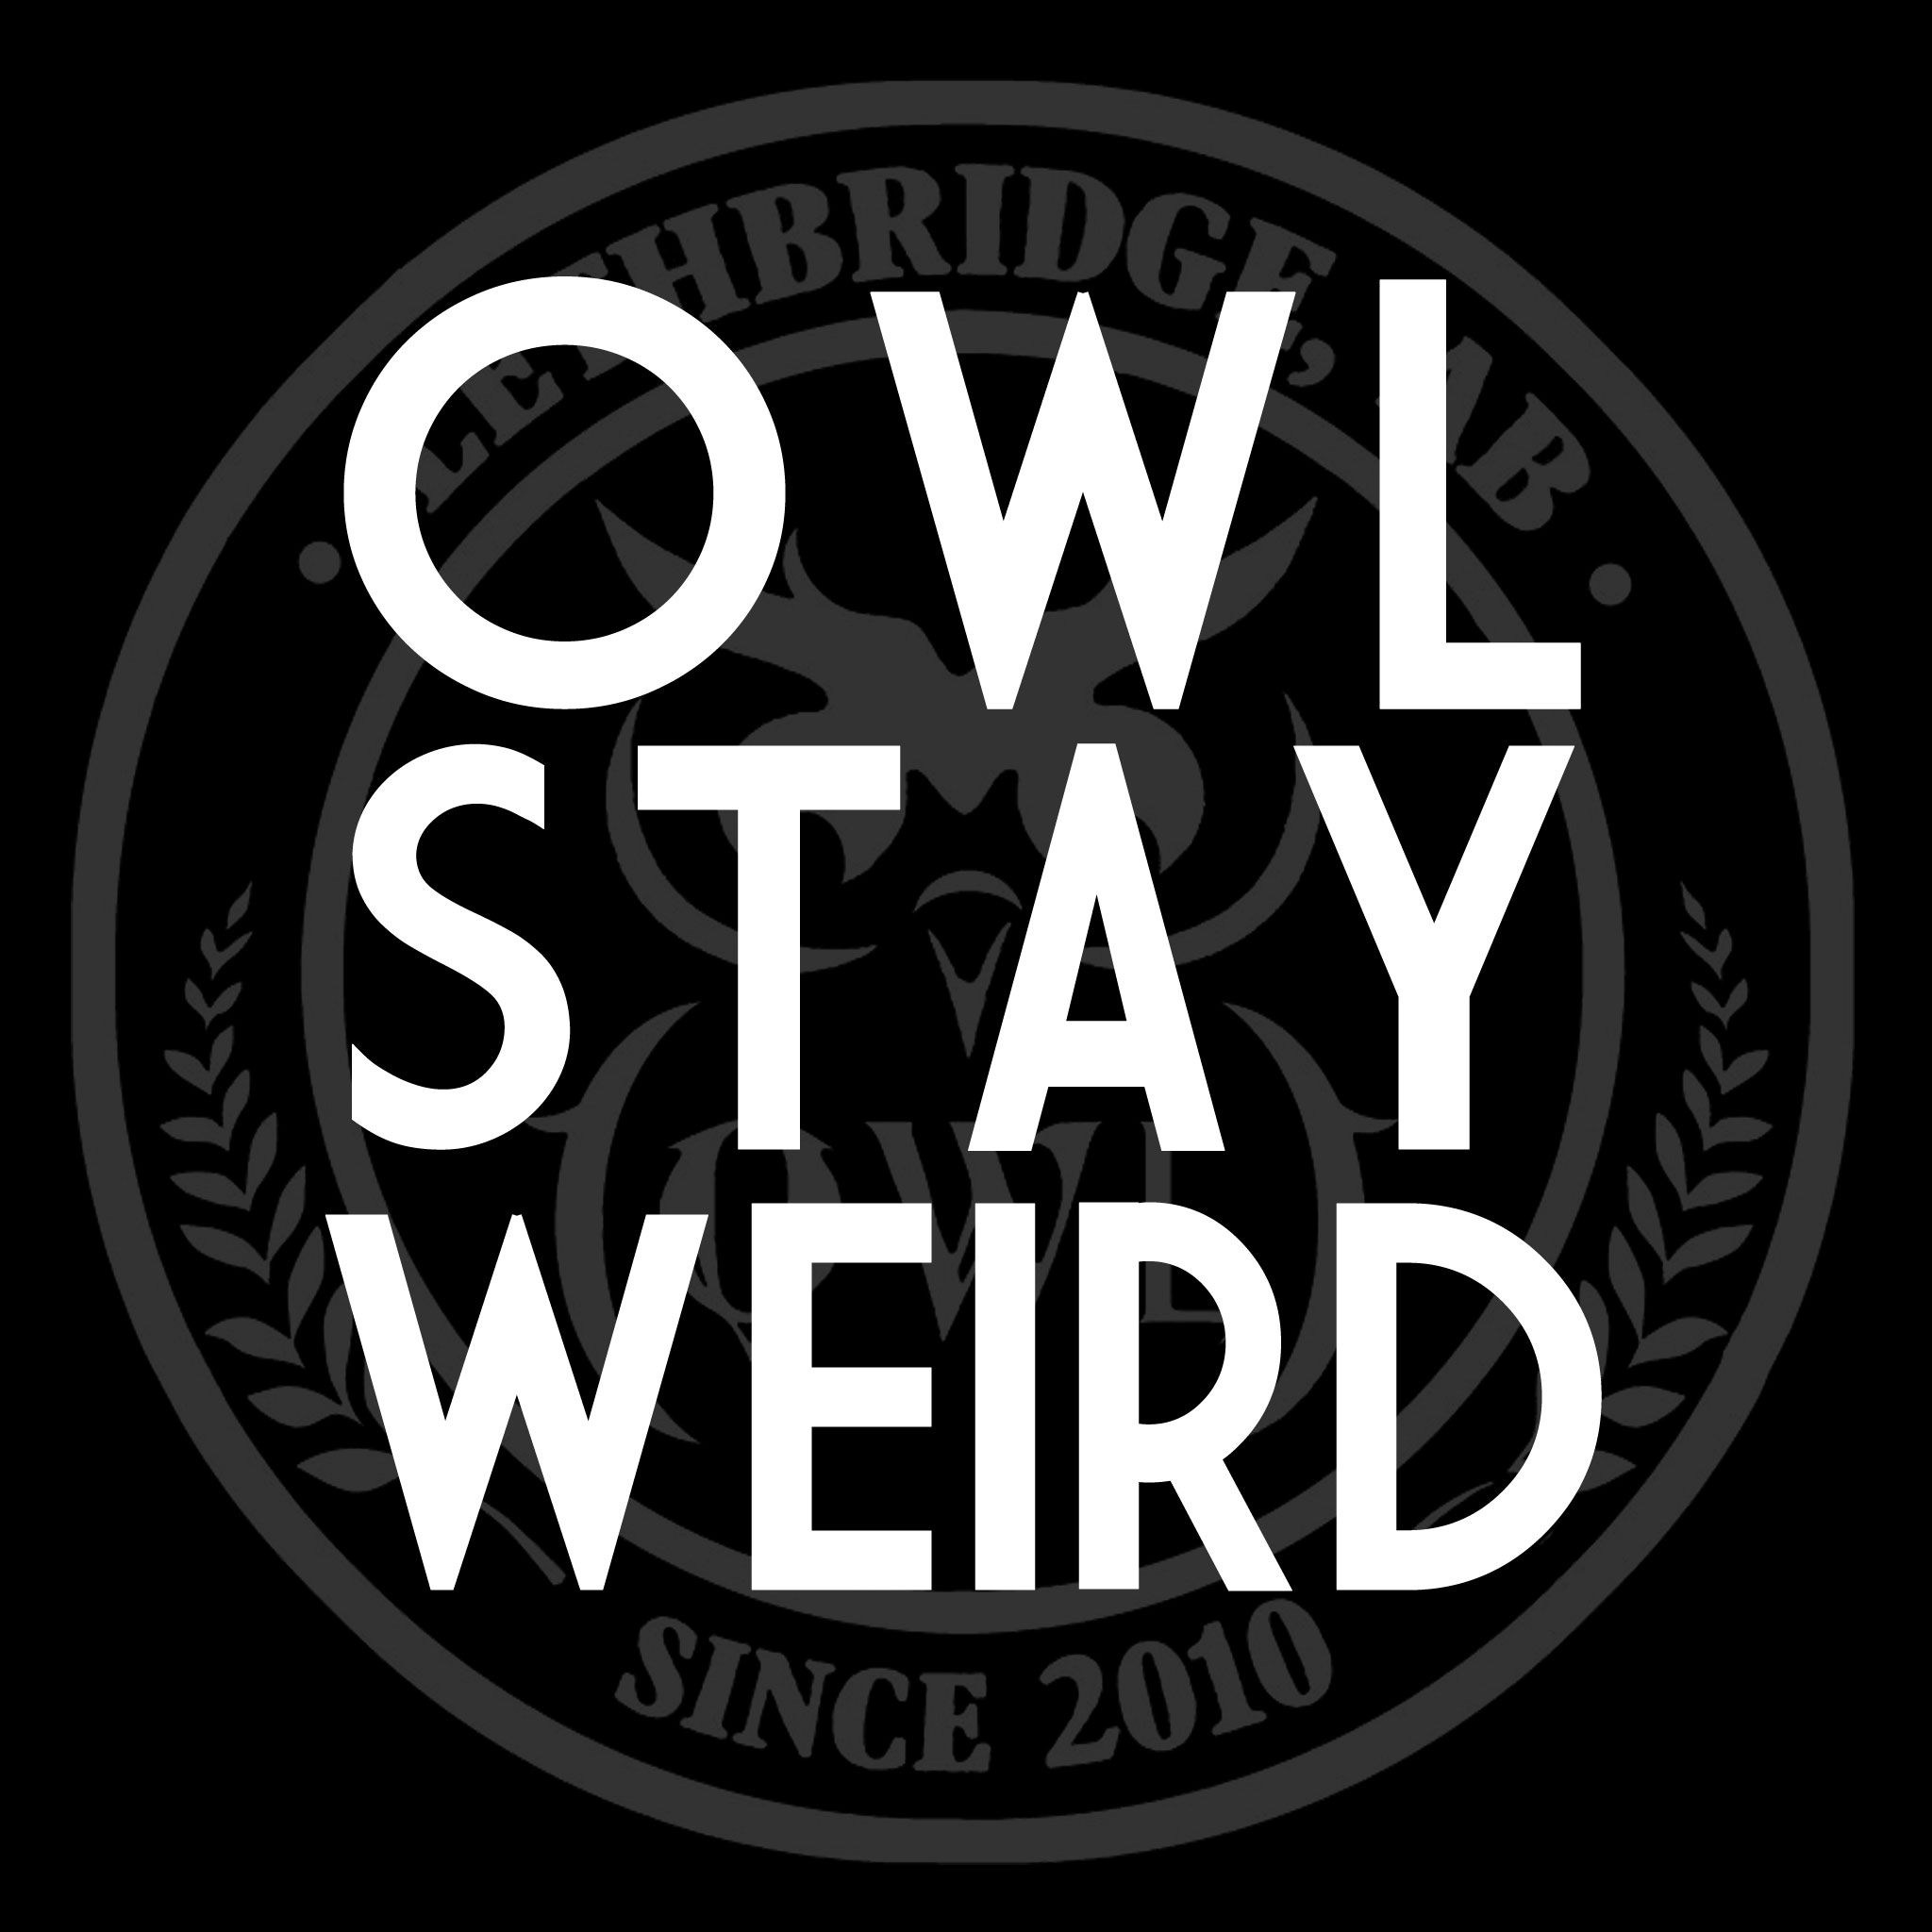 Owl Acoustic Lounge